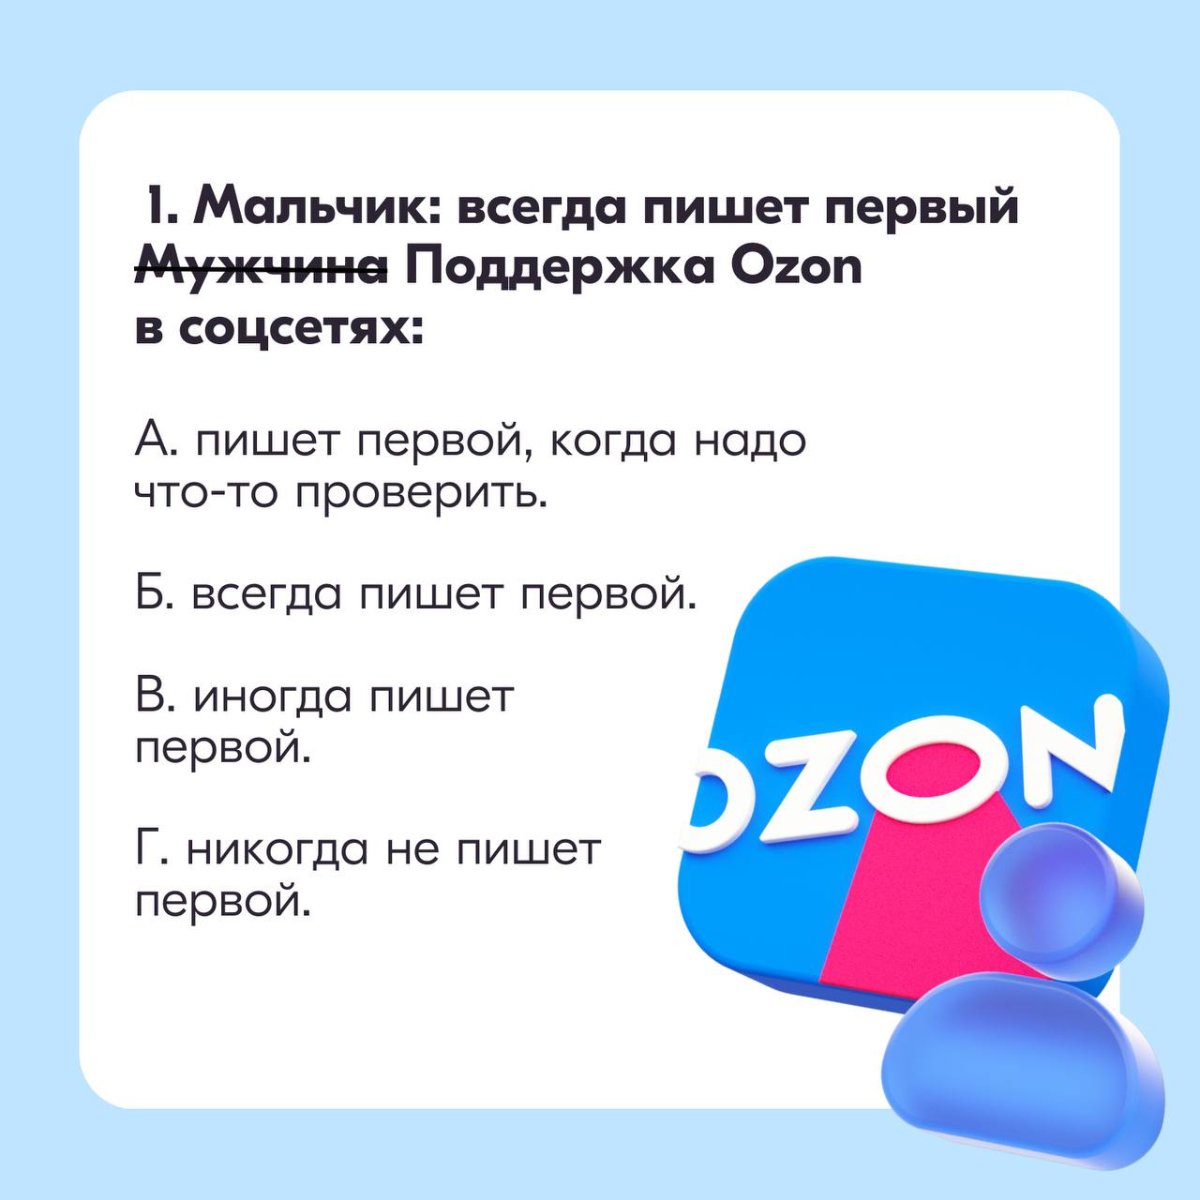 Маркетплейс Озон. База знаний Озон. Факты про Озон маркетплейс. Маркетплейс Озон картинки номенклатура.